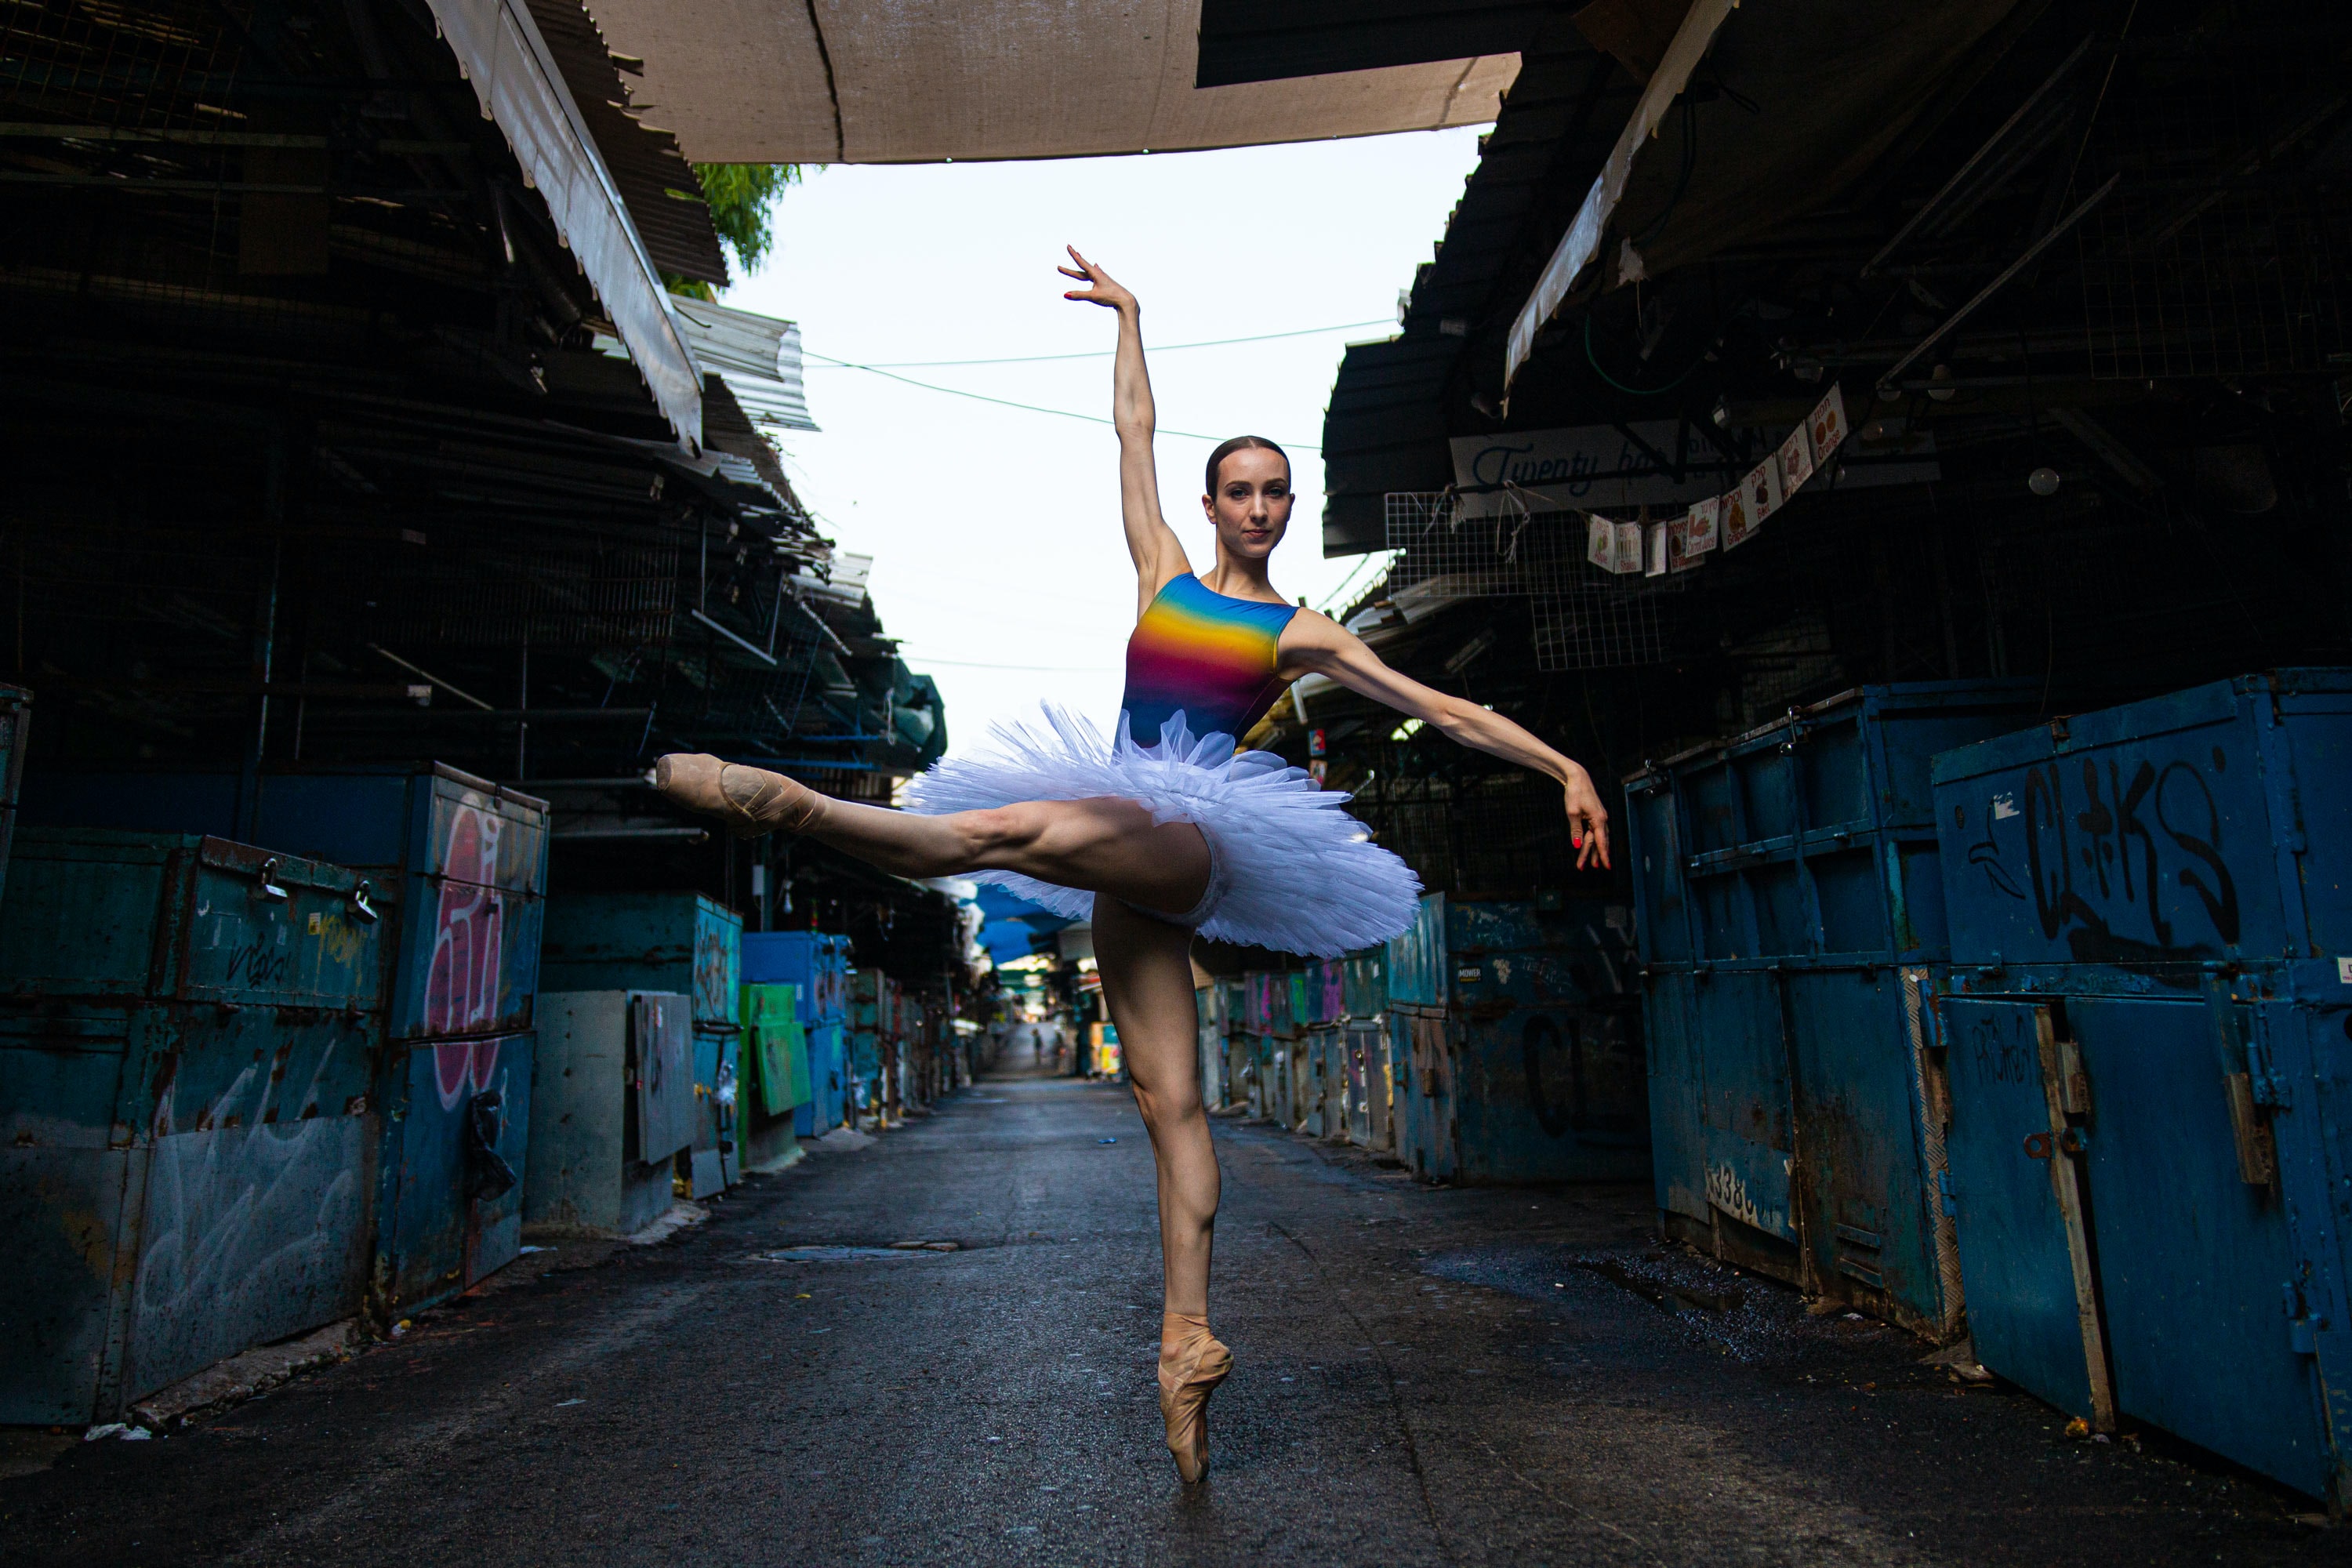 Market Dance, a ballerina in the Carmel Market